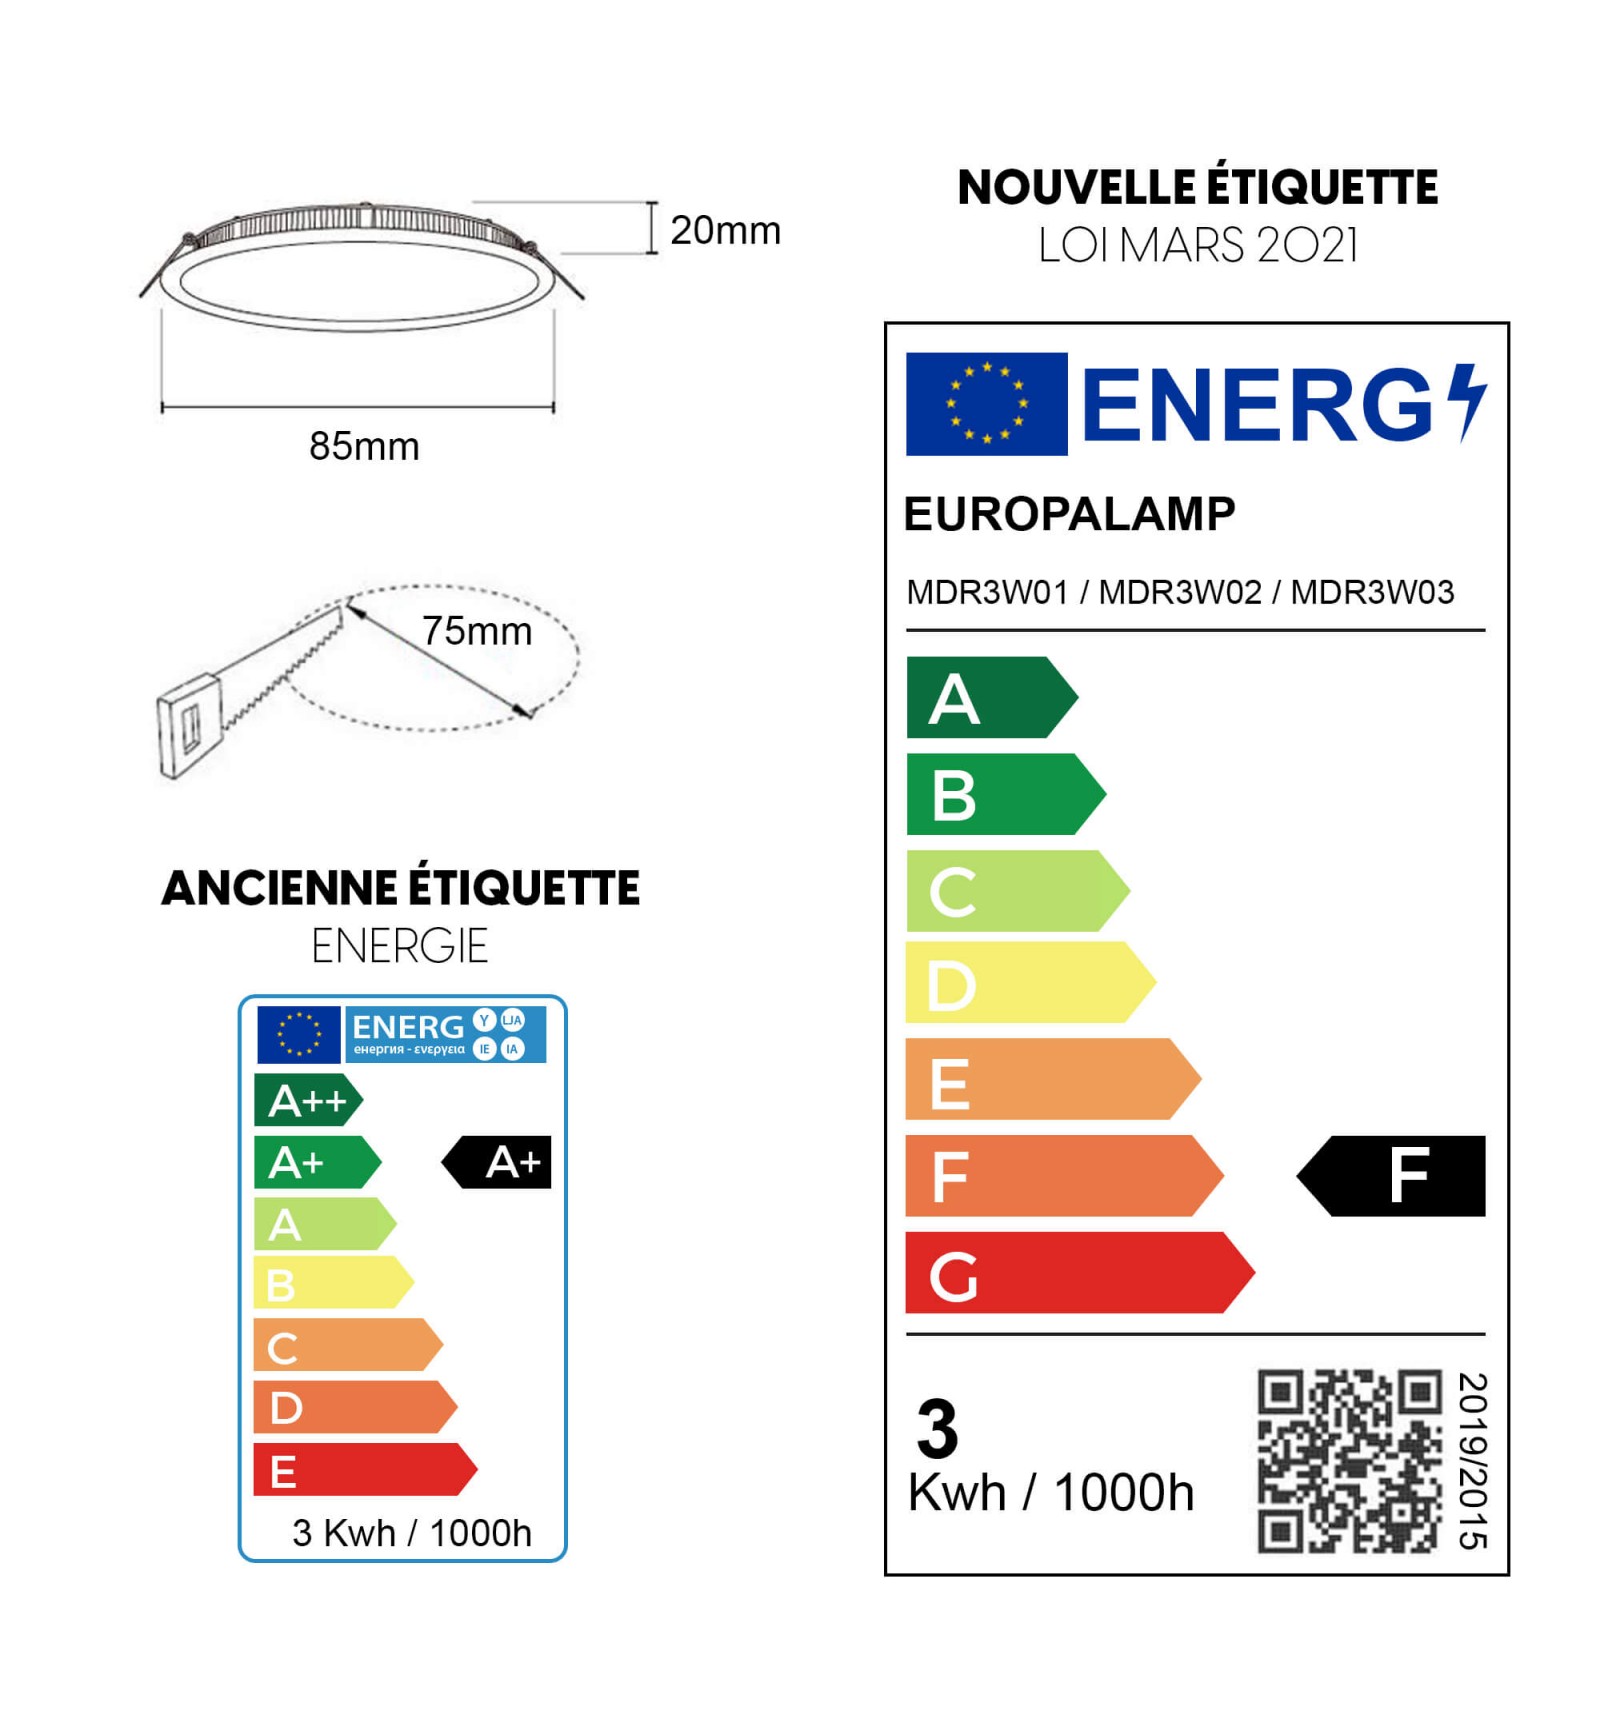 Lot de 3 Spot Encastrable LED Downlight Panel Extra-Plat 18W Blanc Neutre